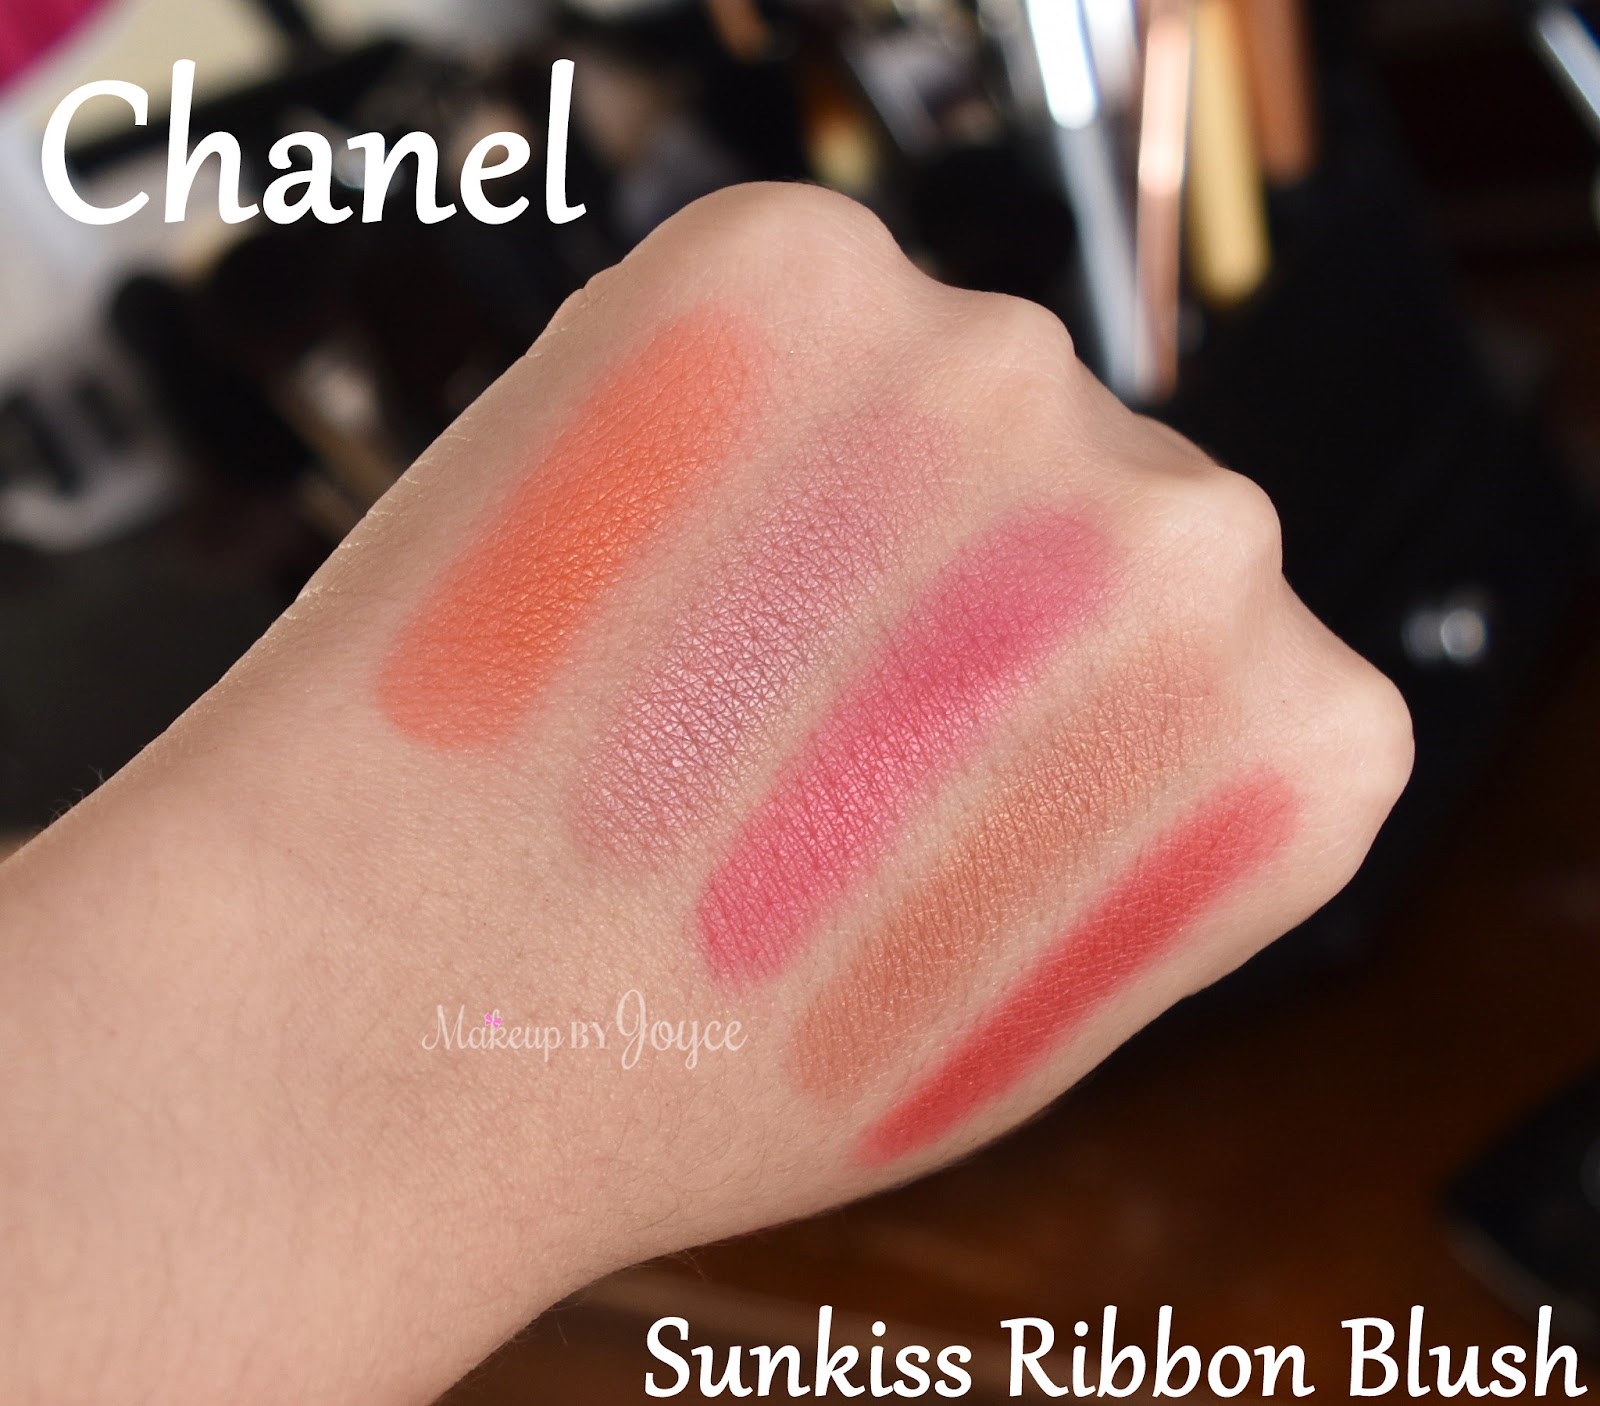 ❤ MakeupByJoyce ❤** !: Review + Swatches - Chanel Sunkiss Ribbon Blush +  Infiniment Illuminating Powder